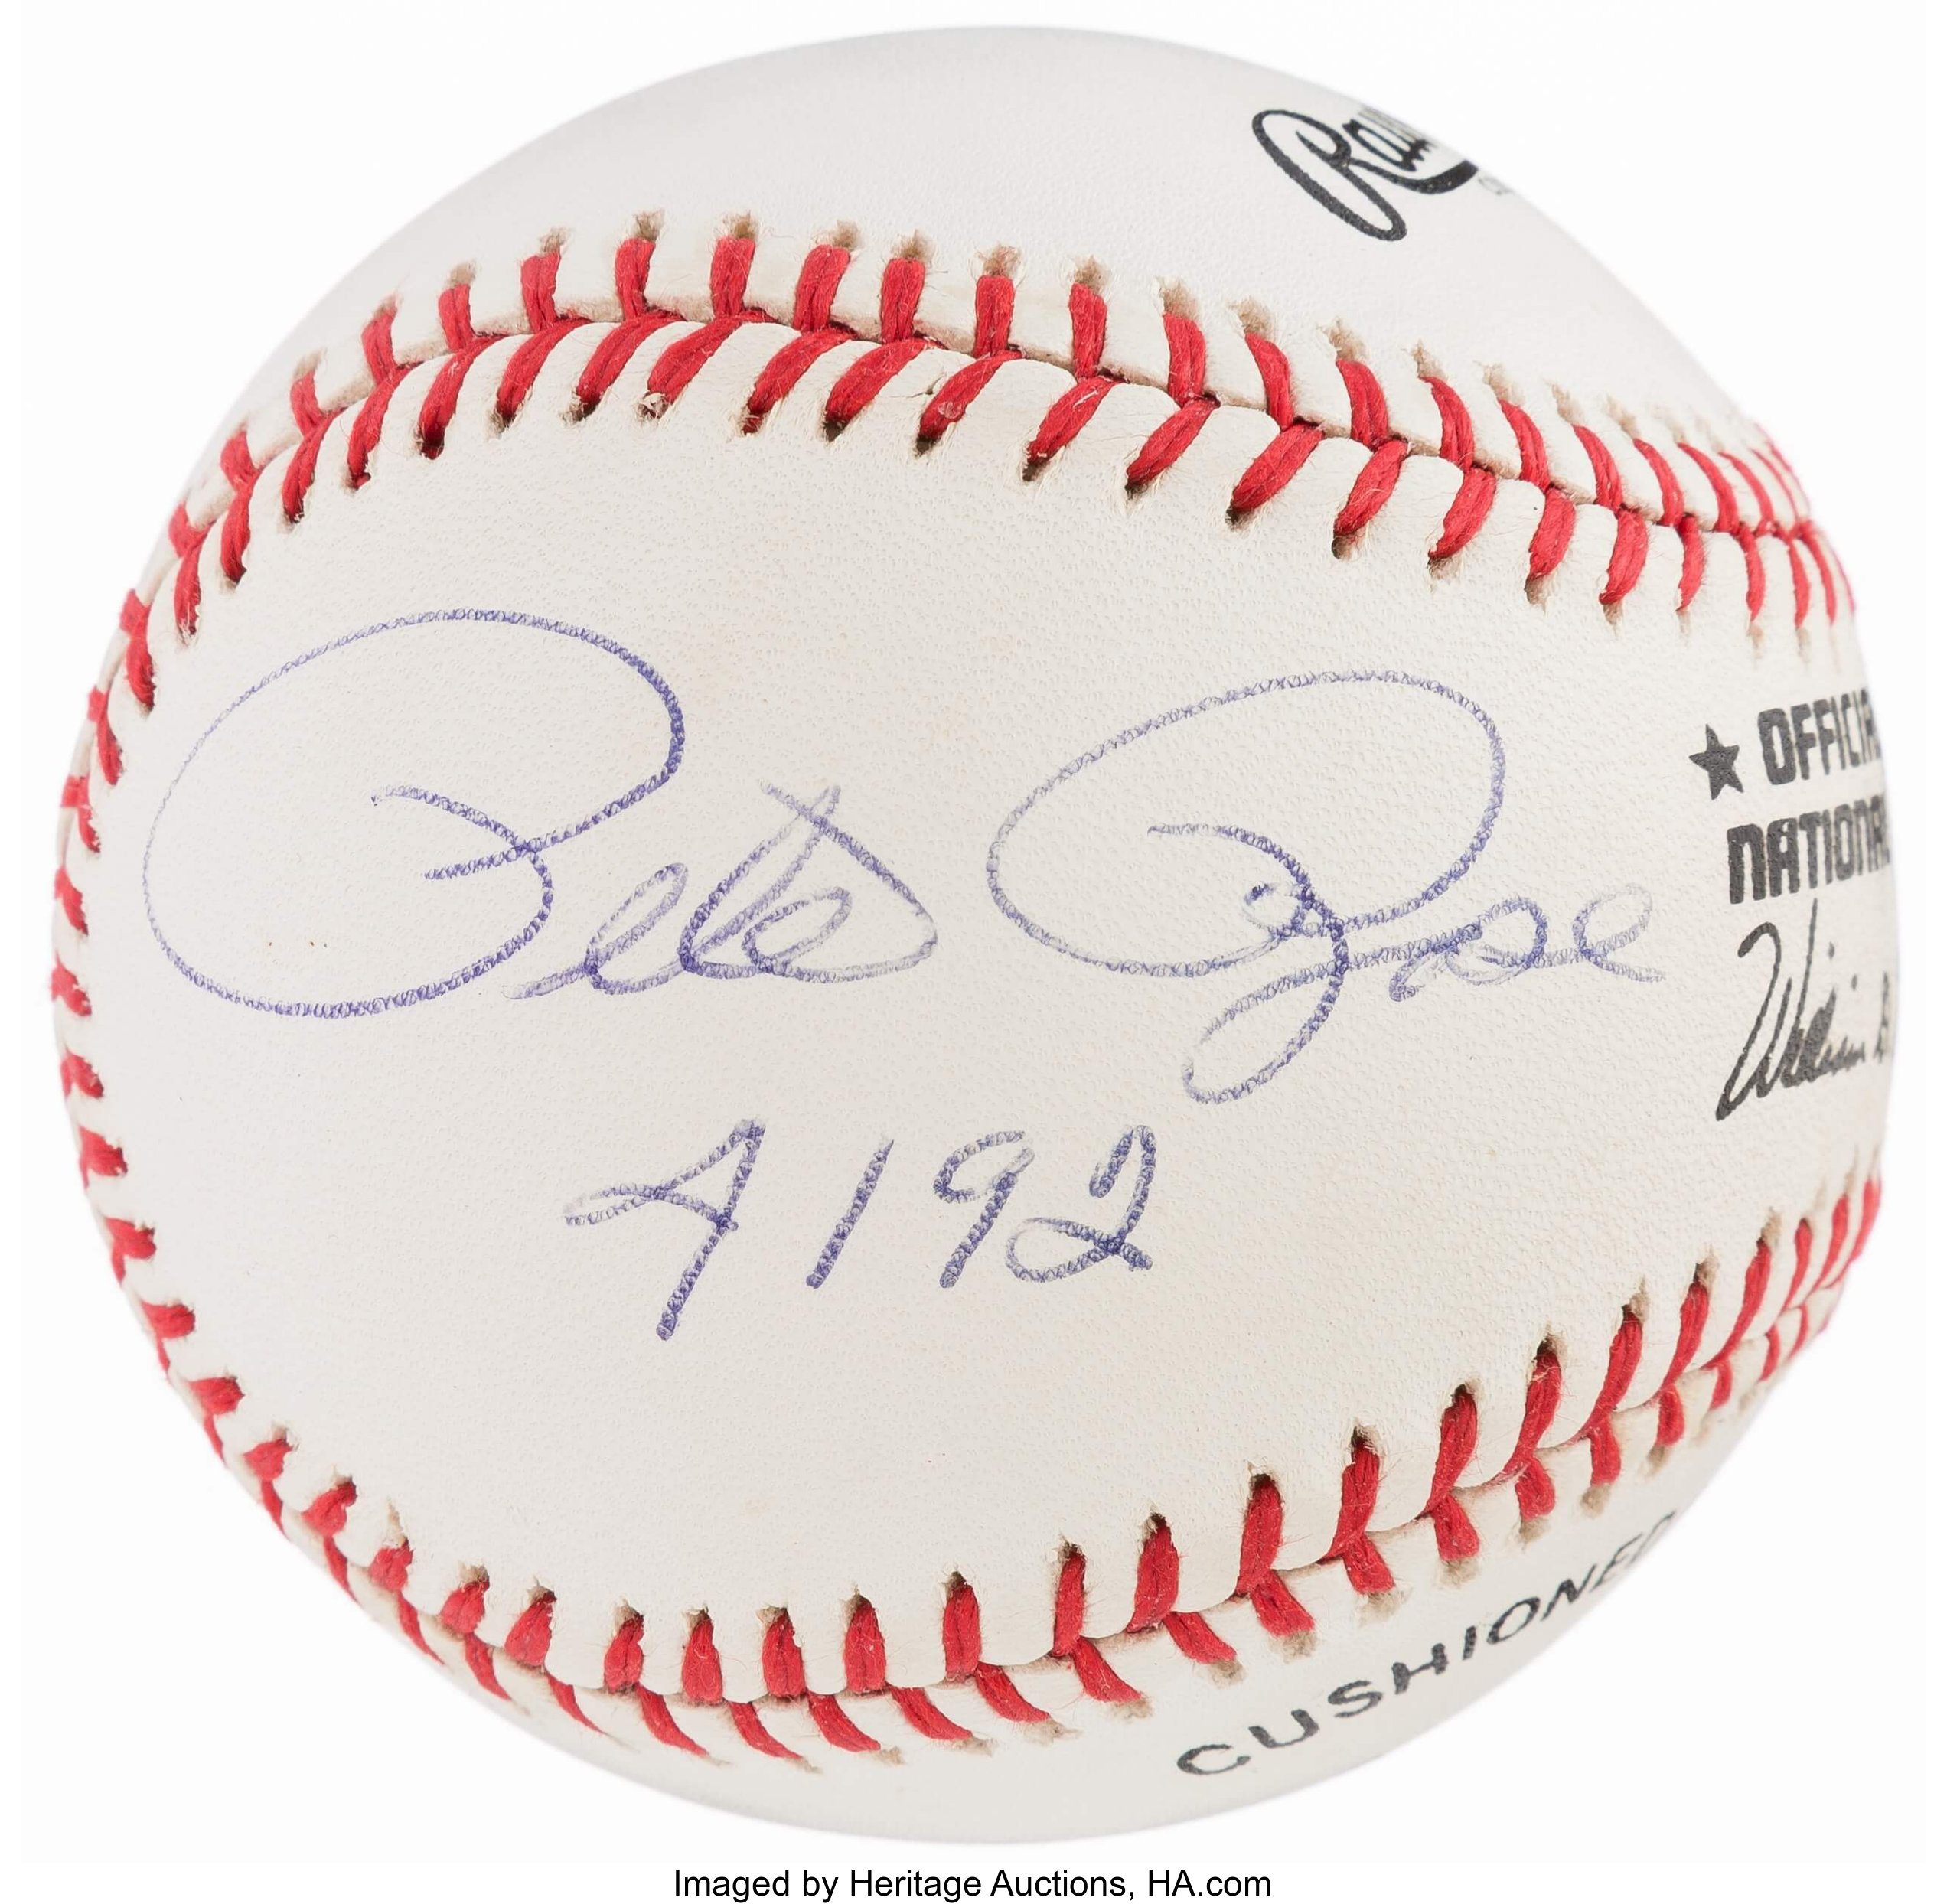 Pete Rose 4192 Single Signed Baseball. Baseball Collectibles